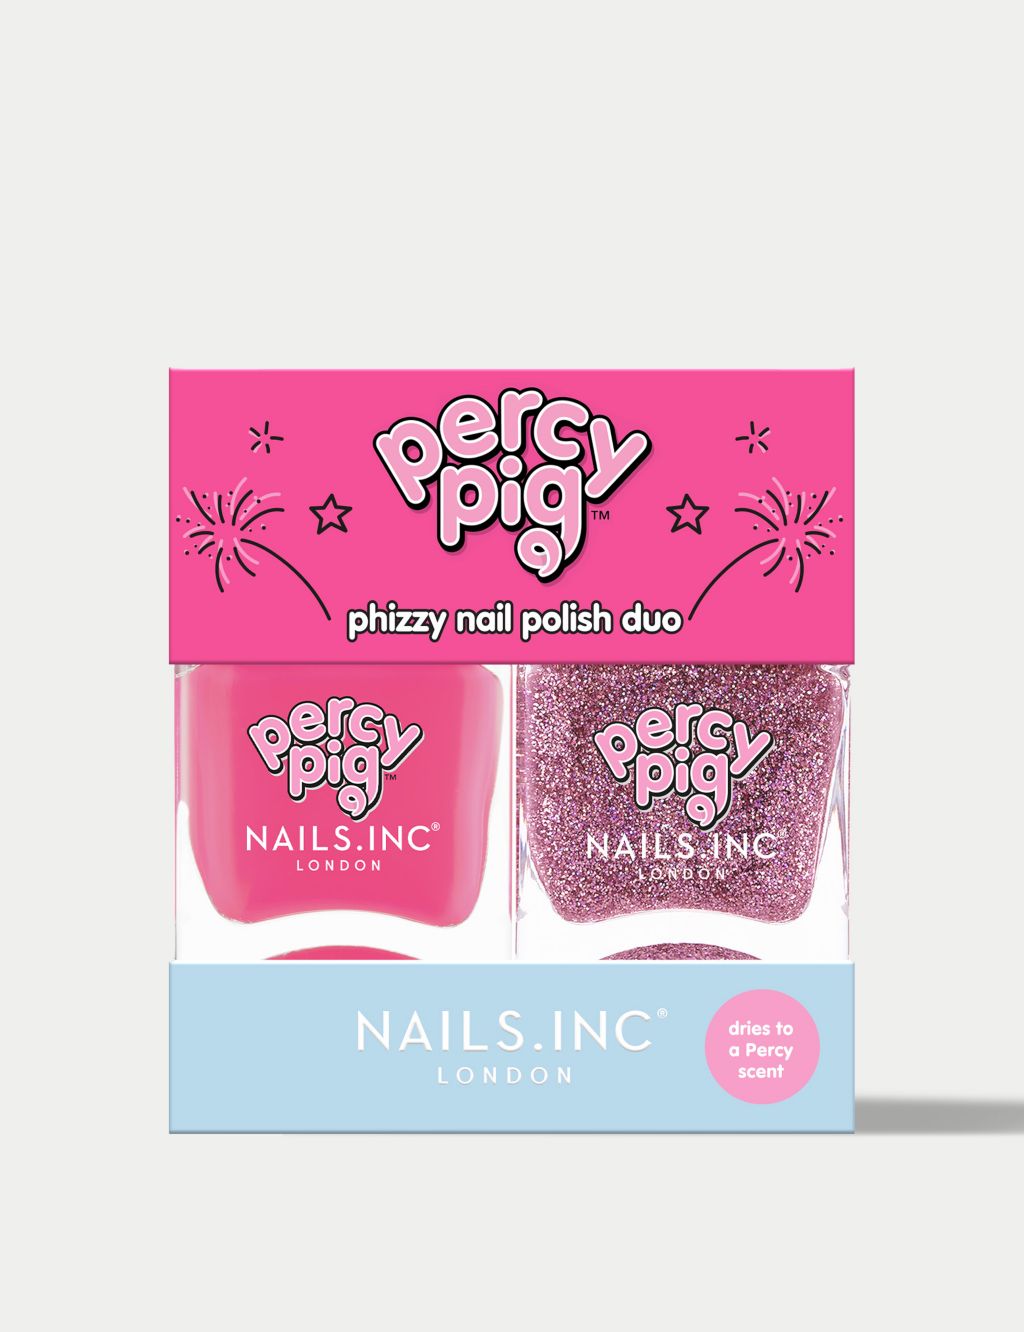 Nails.INC Percy Pig Phizzy Nail Polish Duo 2x14ml image 1